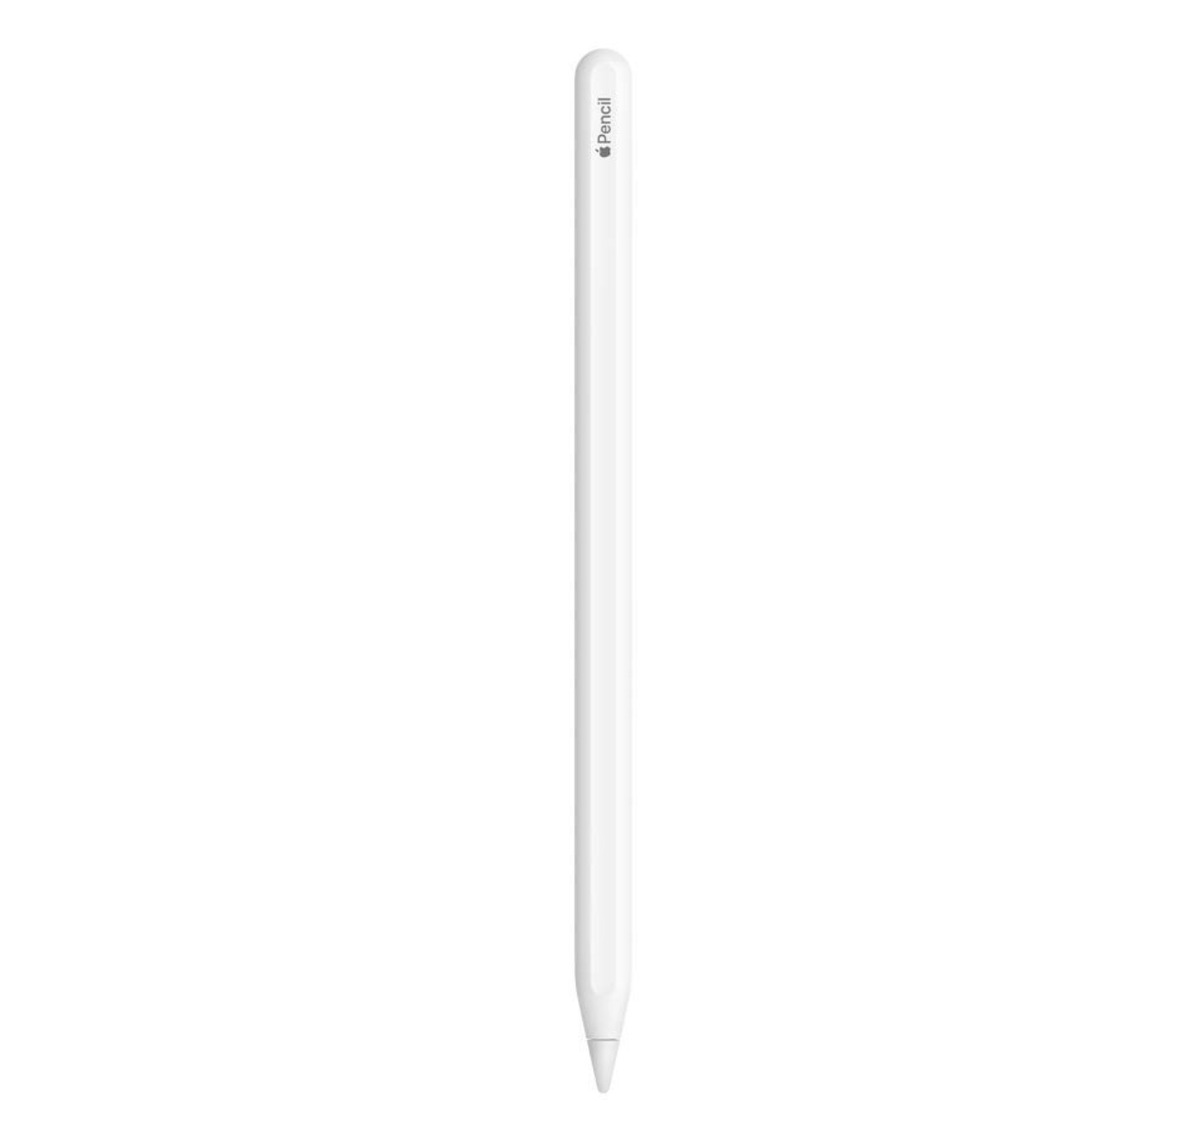 Promos : Prise Osram compatible Hue à 9€, MacBook Pro 13" à 1349€, Fenix 5 à 349€